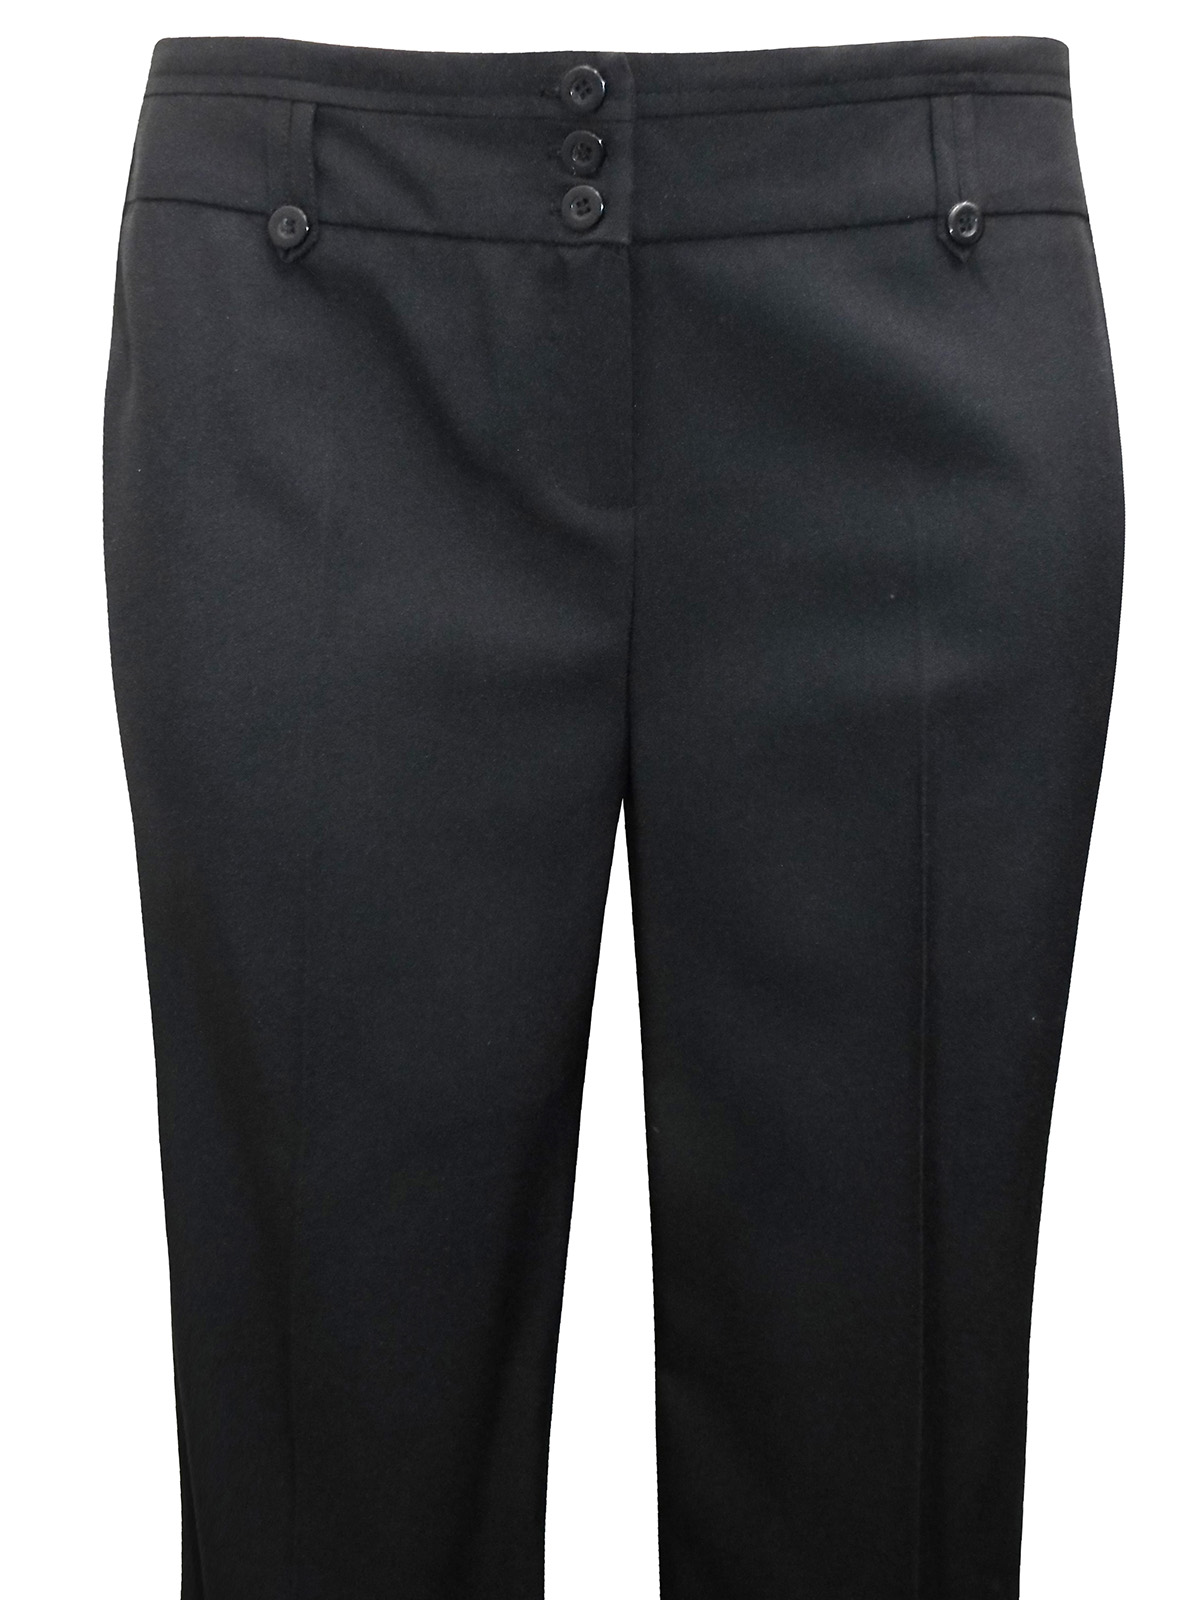 BLACK Straight Leg Triple Button Trousers - Plus Size 14 to 32